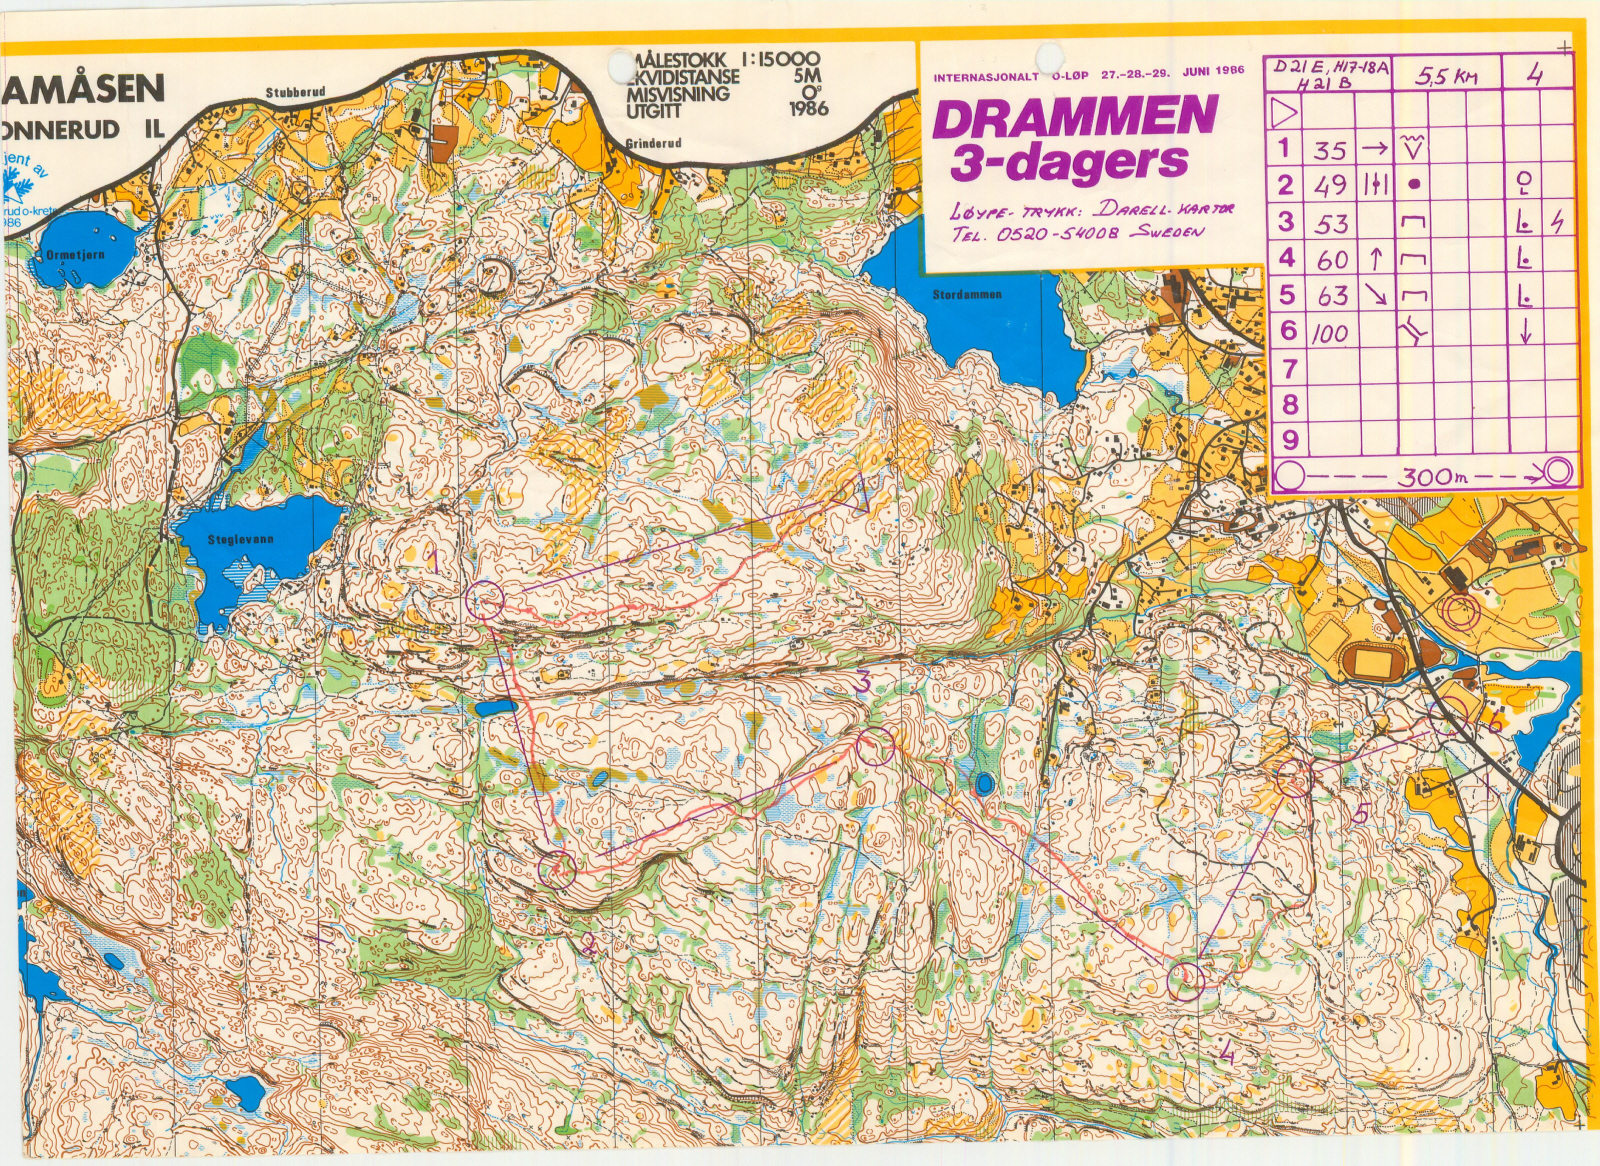 Drammen 3-dagers etappe 3 (29.06.1986)